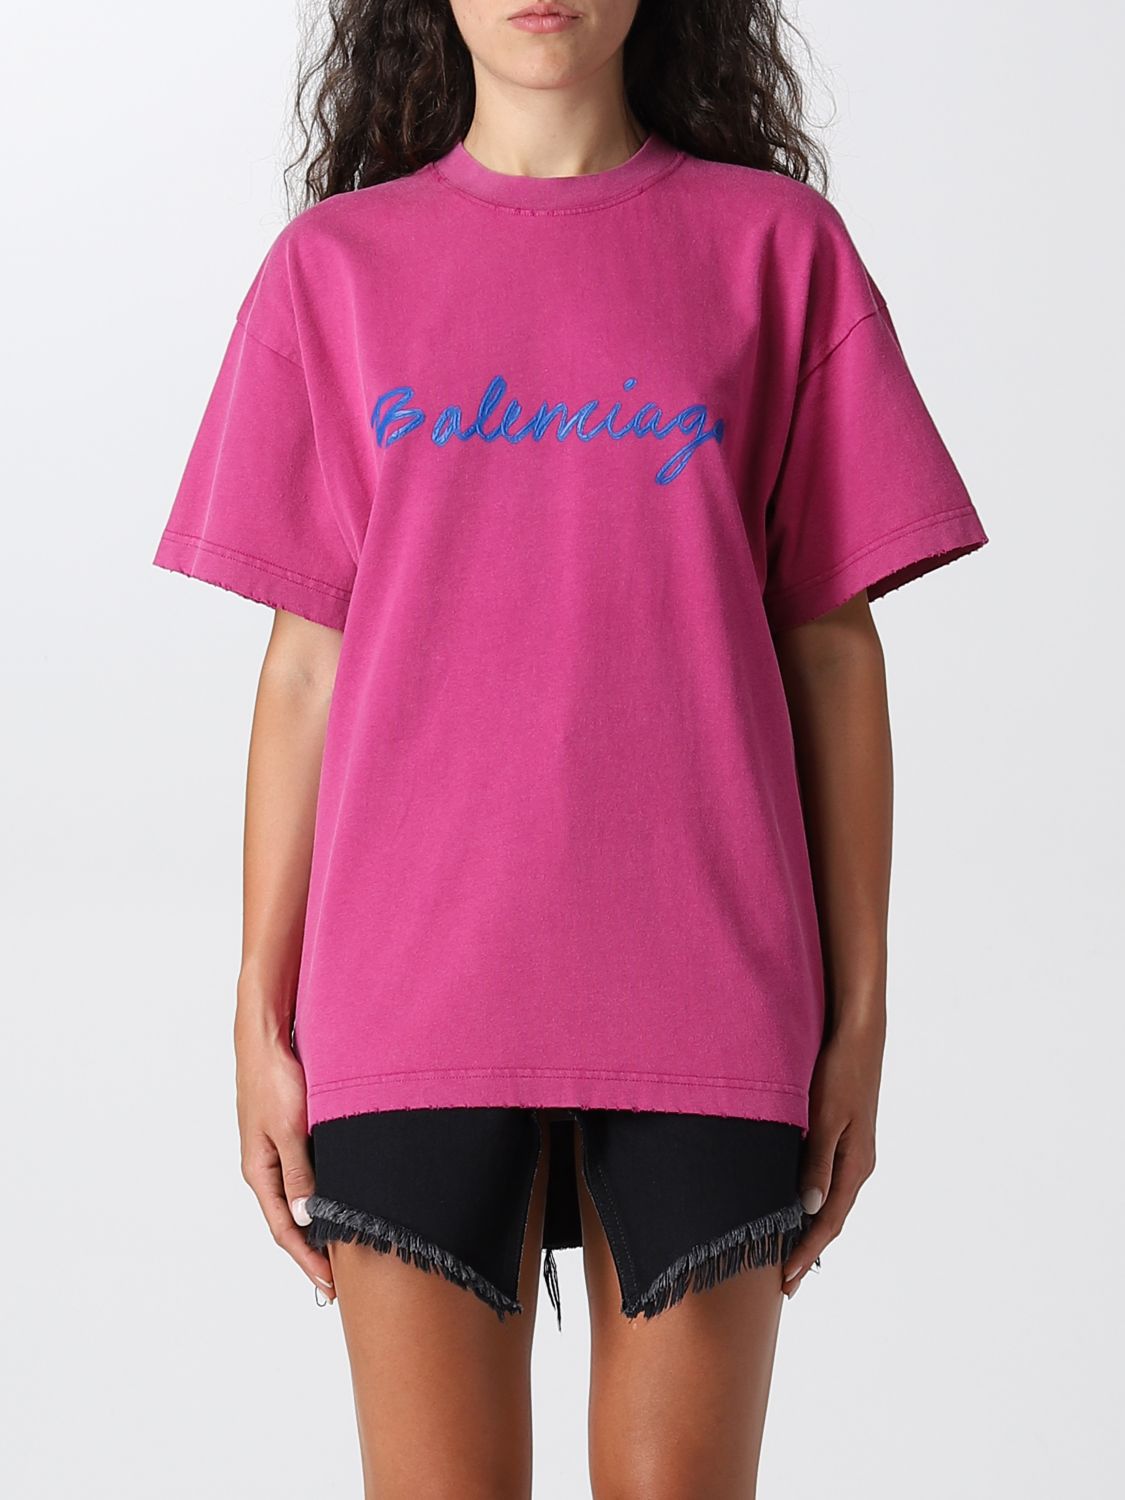 T-Shirt Balenciaga: Balenciaga t-shirt for women pink 1